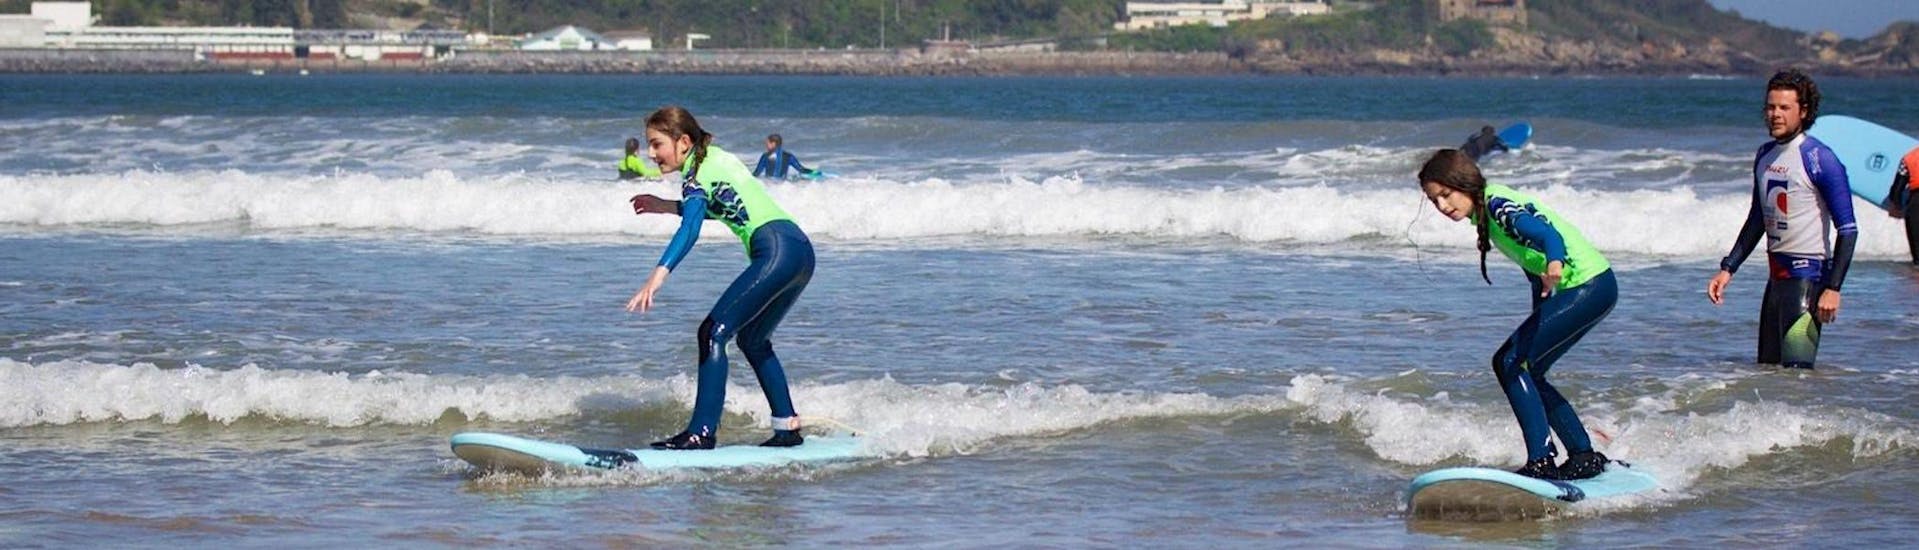 Lezioni private di surf a Hendaye da 7 anni per tutti i livelli.